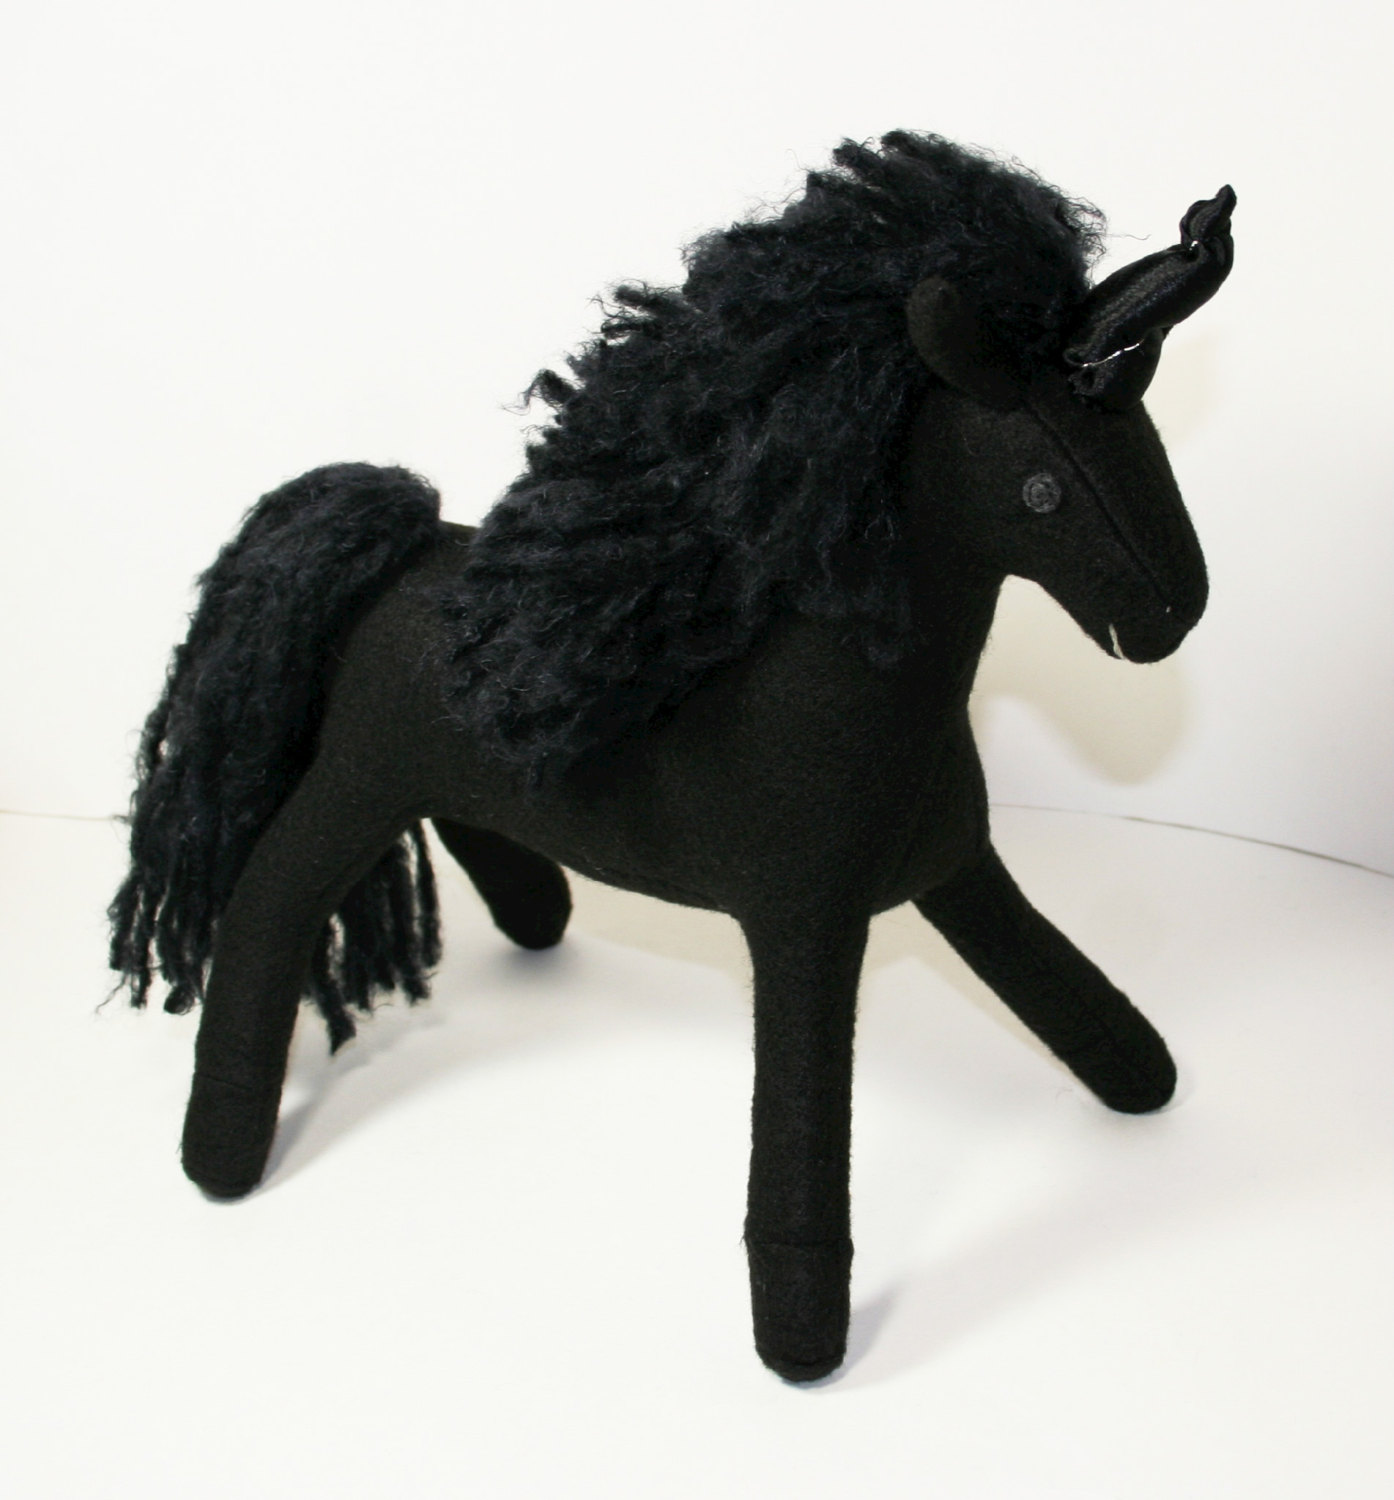 Popular items for unicorn fantasy on Etsy